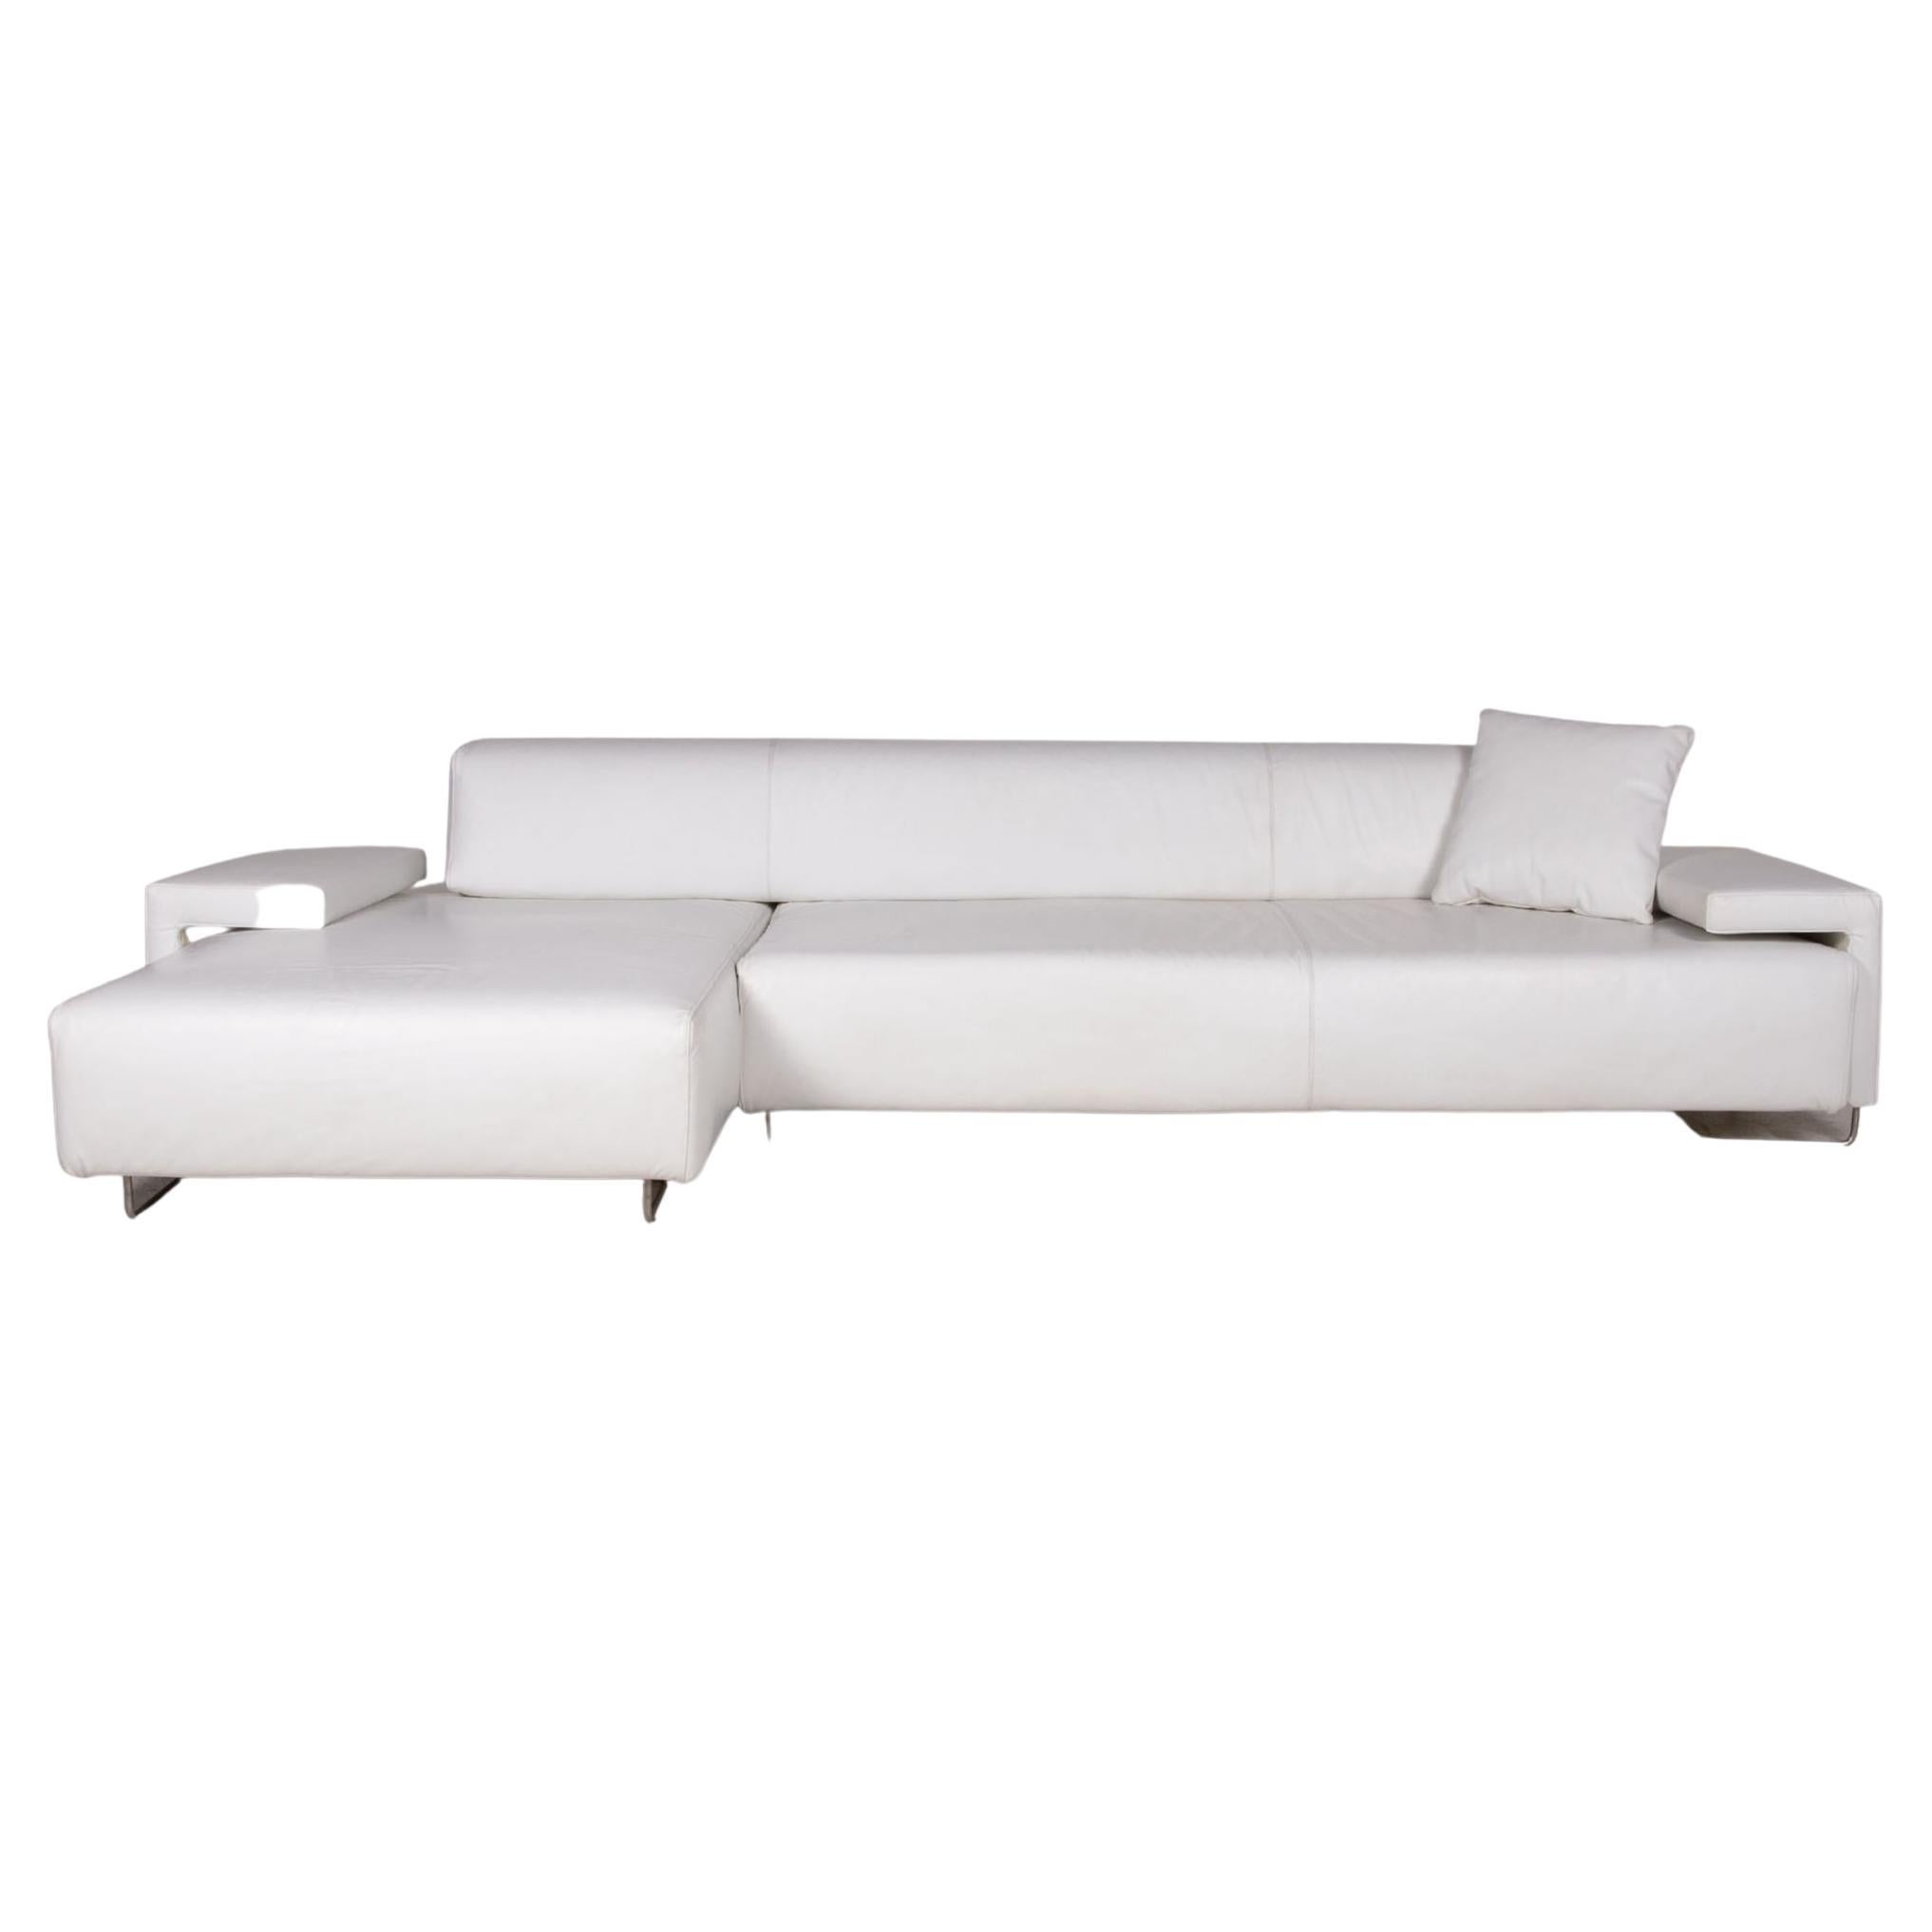 Moroso Lowland Leather Sofa White Corner Sofa Couch